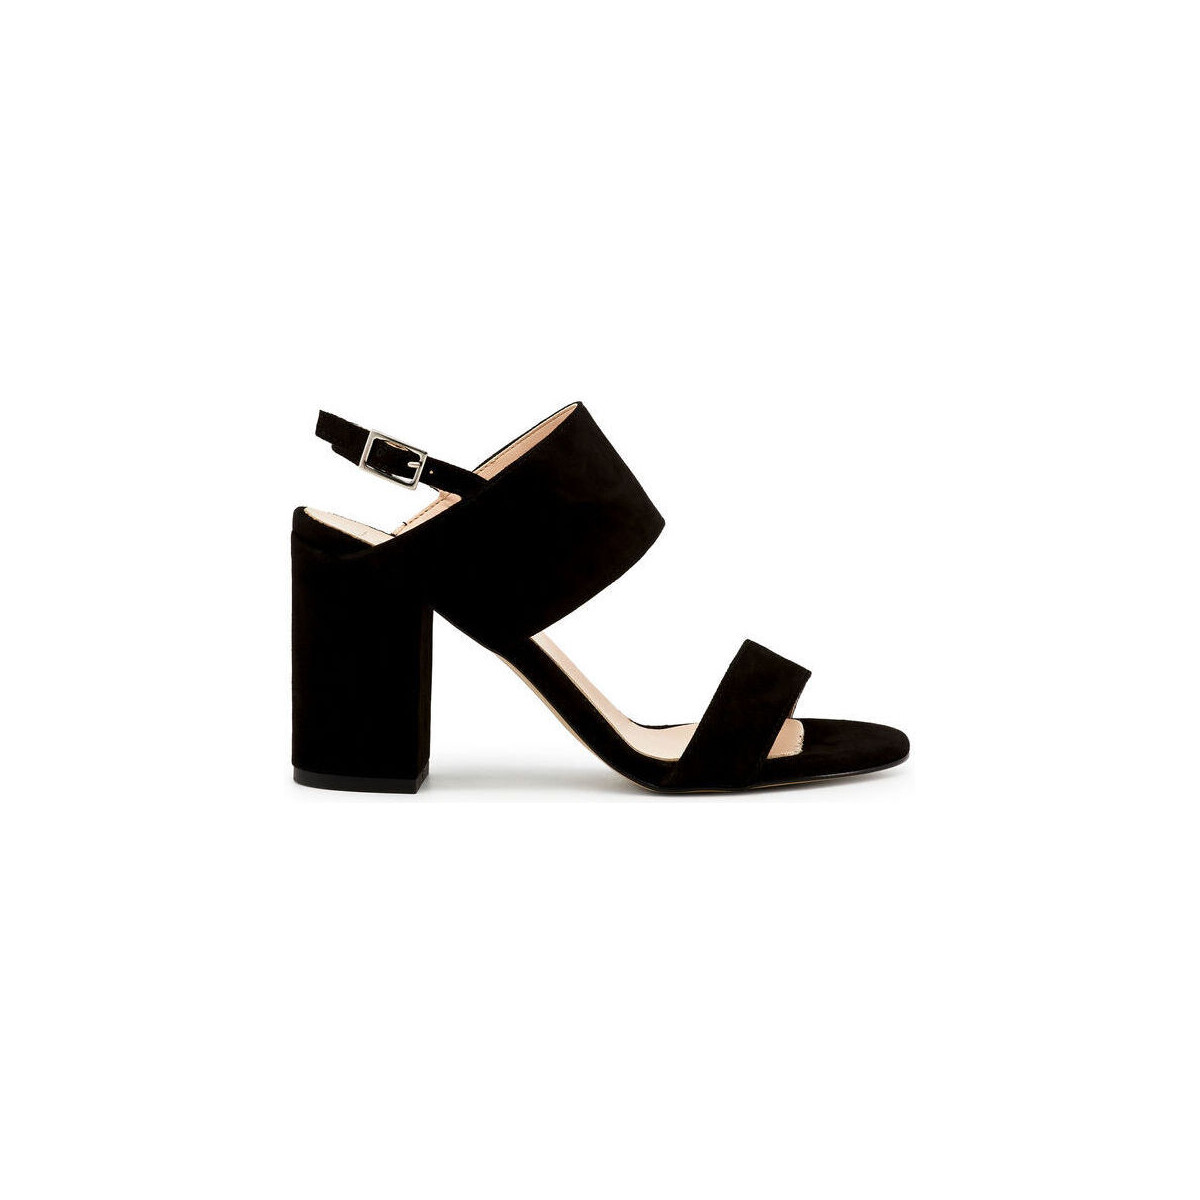 Schoenen Dames Sandalen / Open schoenen Made In Italia - favola Zwart